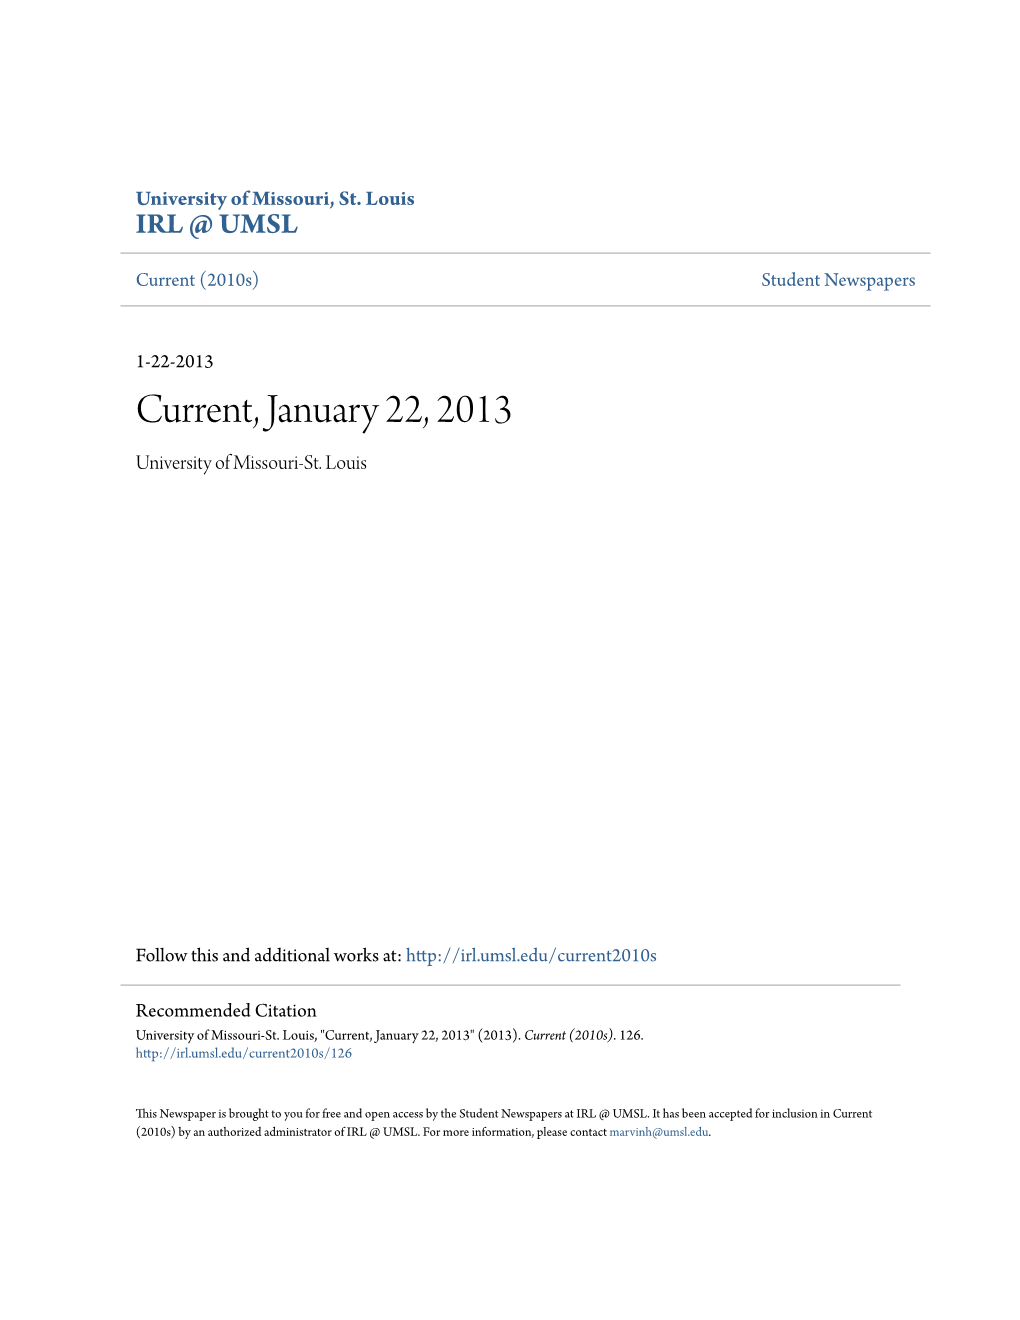 Current, January 22, 2013 University of Missouri-St